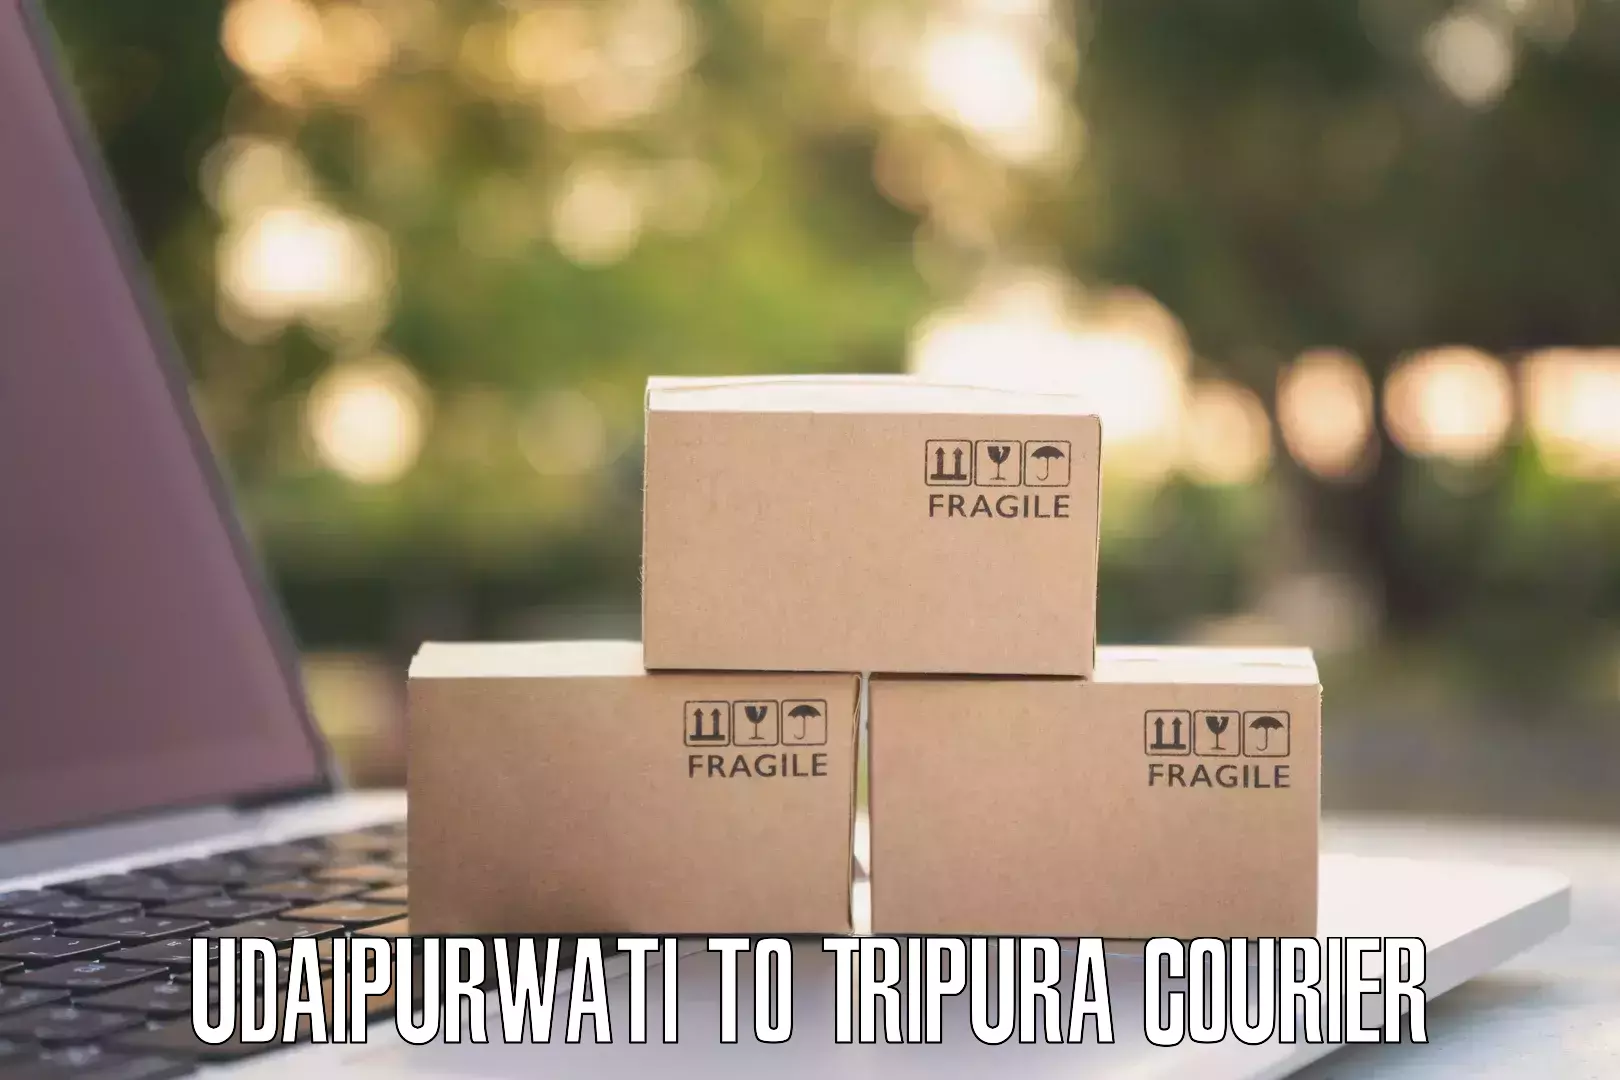 Customer-centric shipping Udaipurwati to Agartala